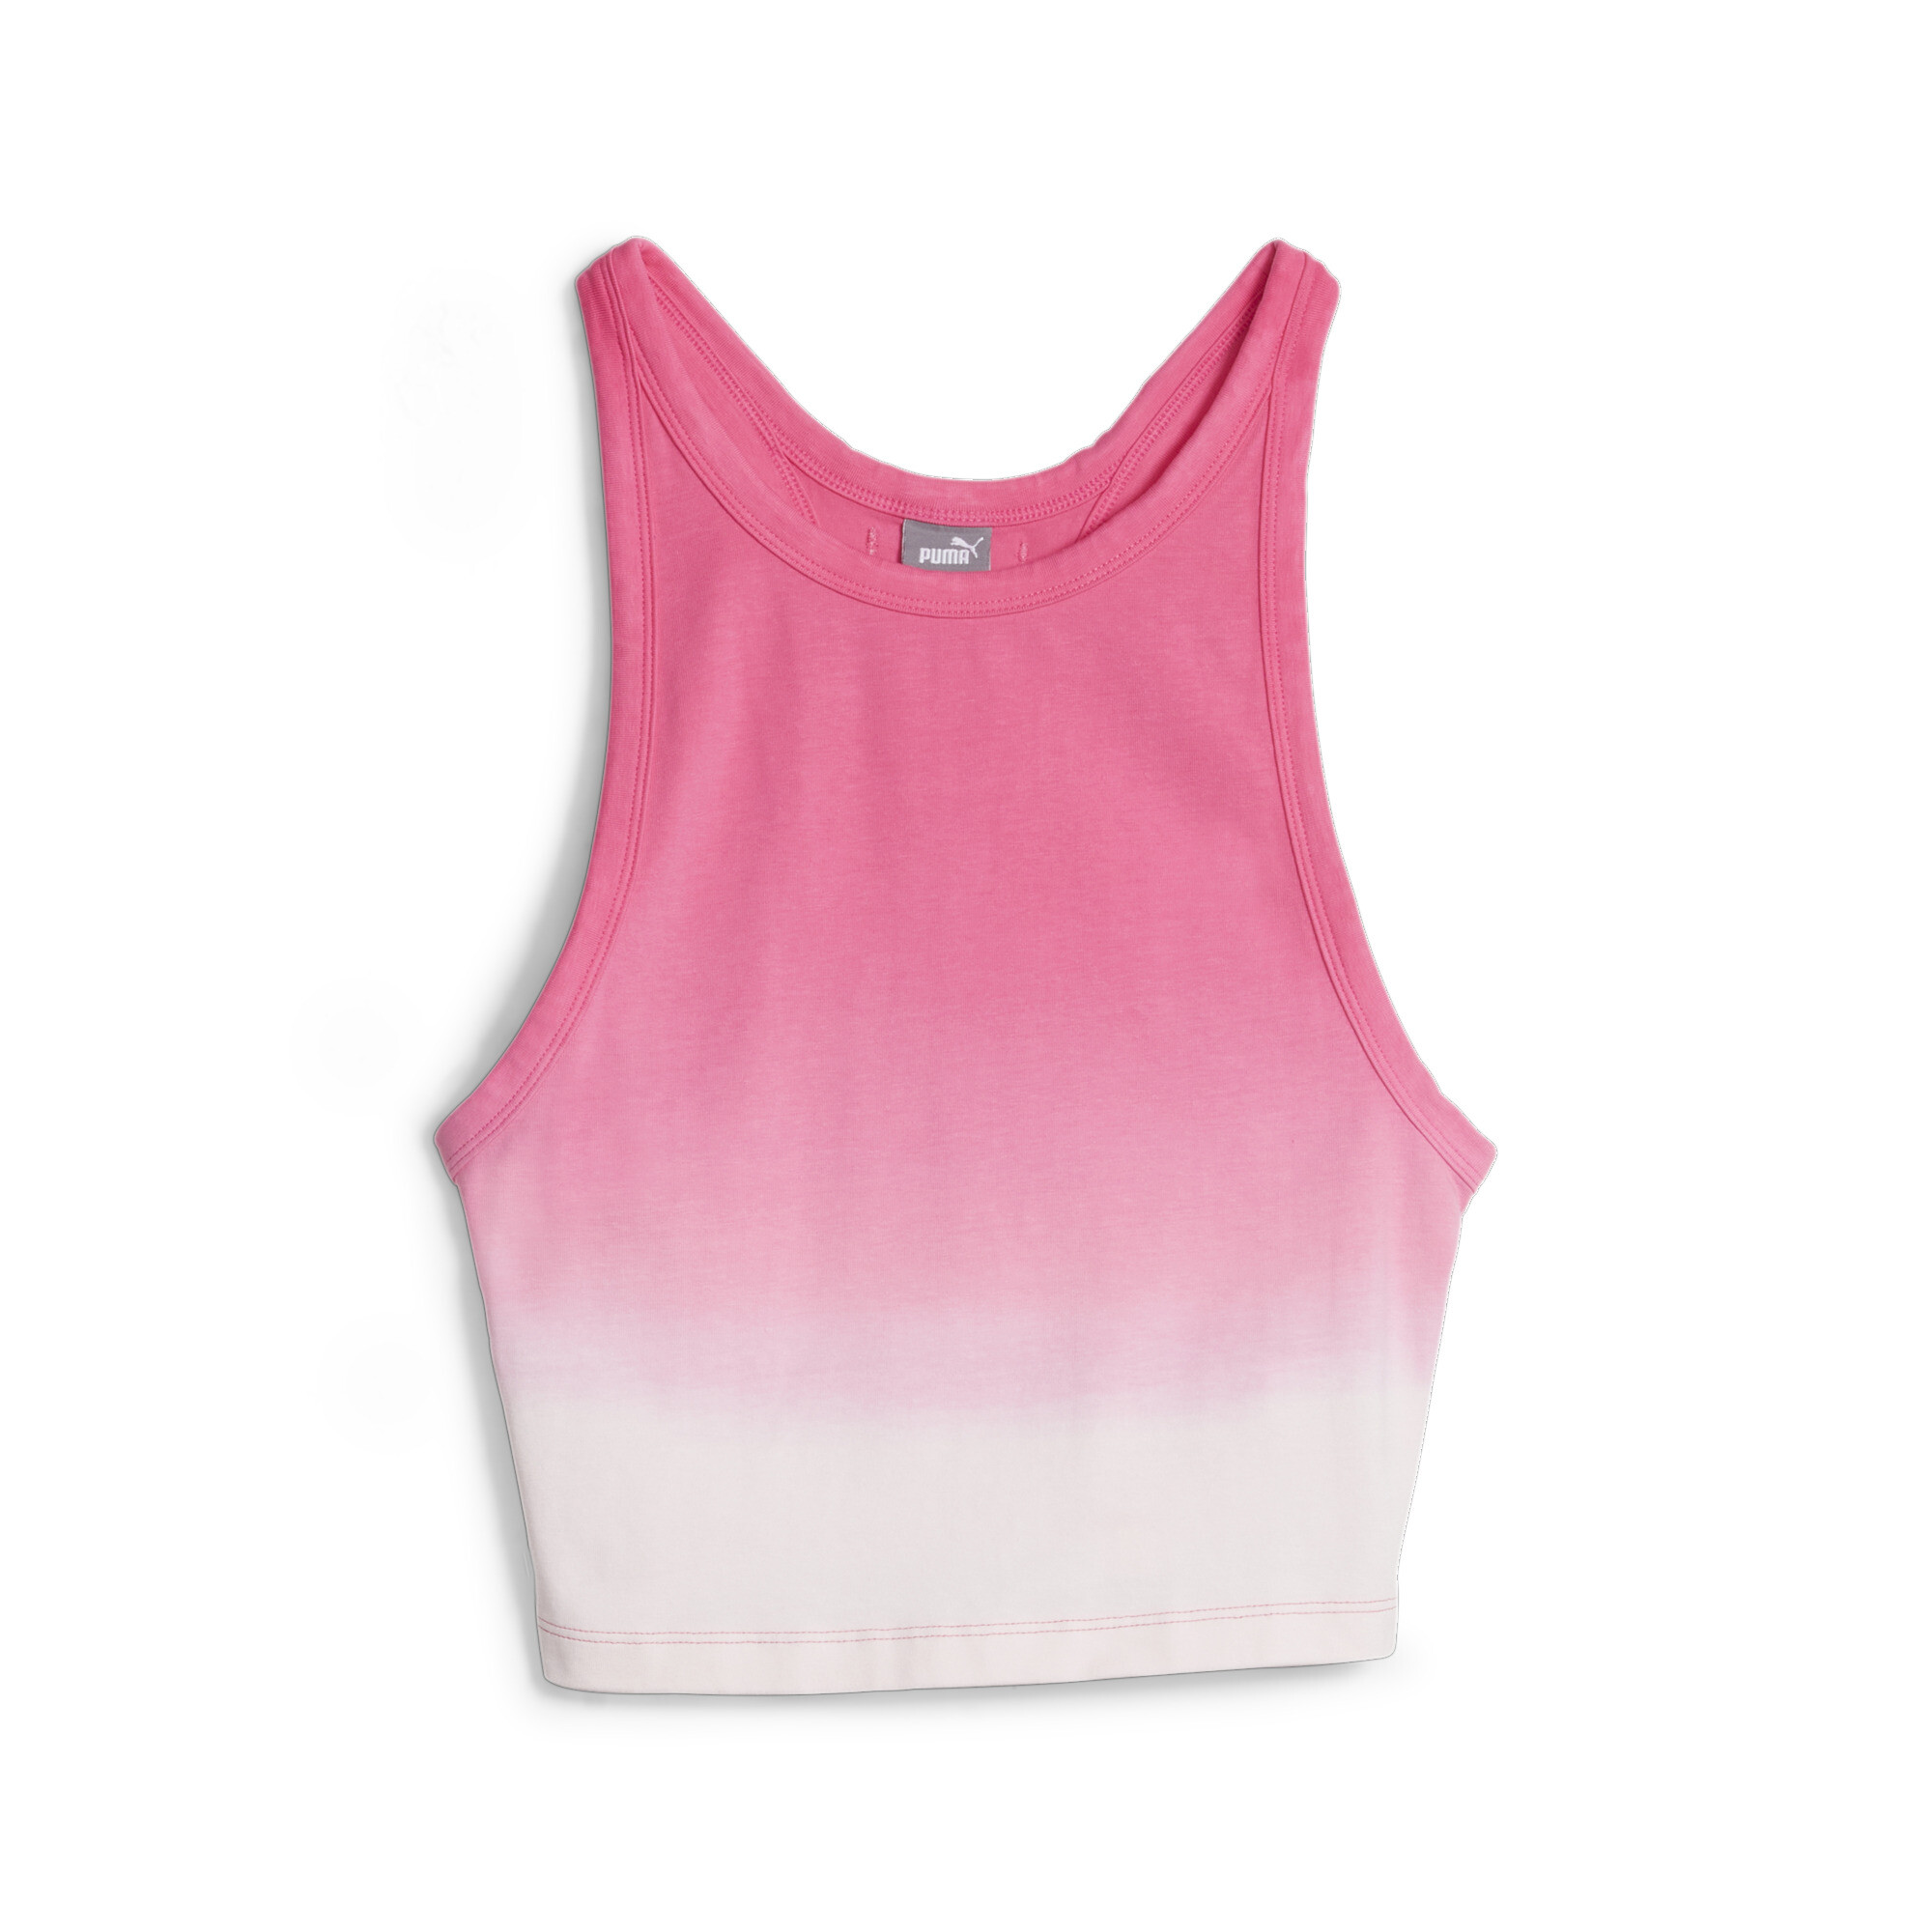 Women's Puma X Lemlem Training Tank Top, Pink, Size S, Clothing